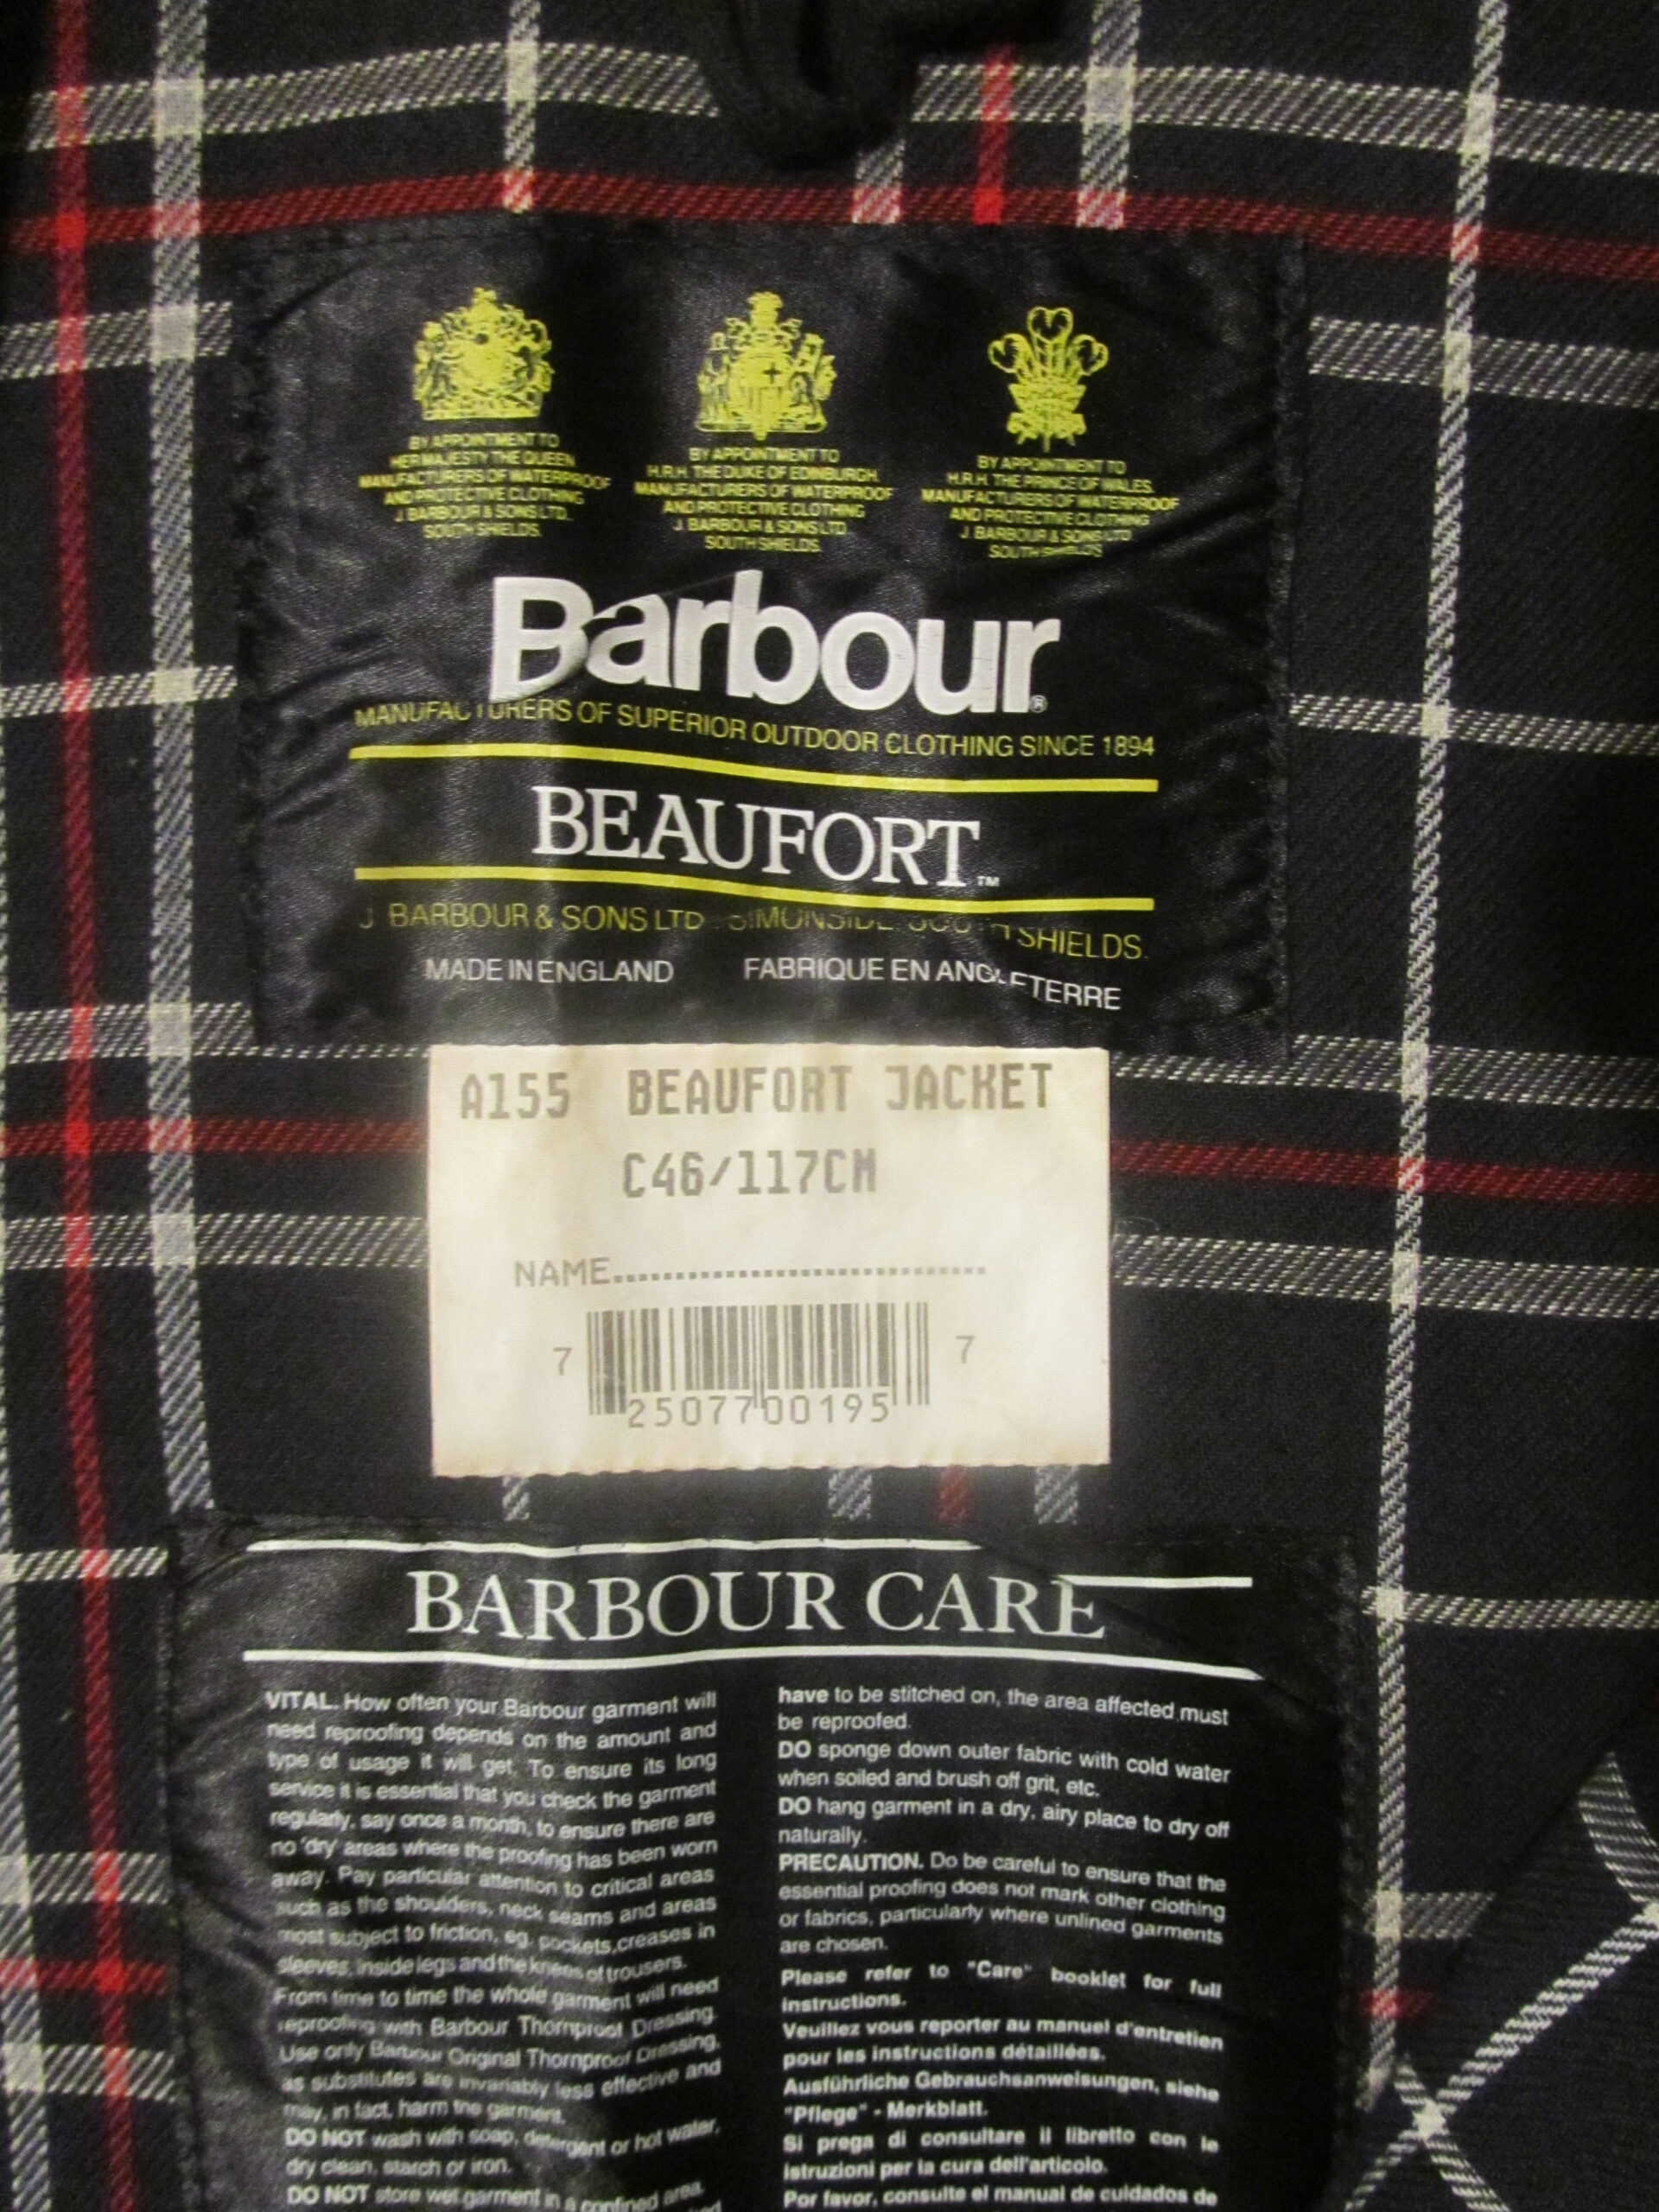 Kurtka Barbour Beaufort woskowana C46/117 cm - Vintage Store